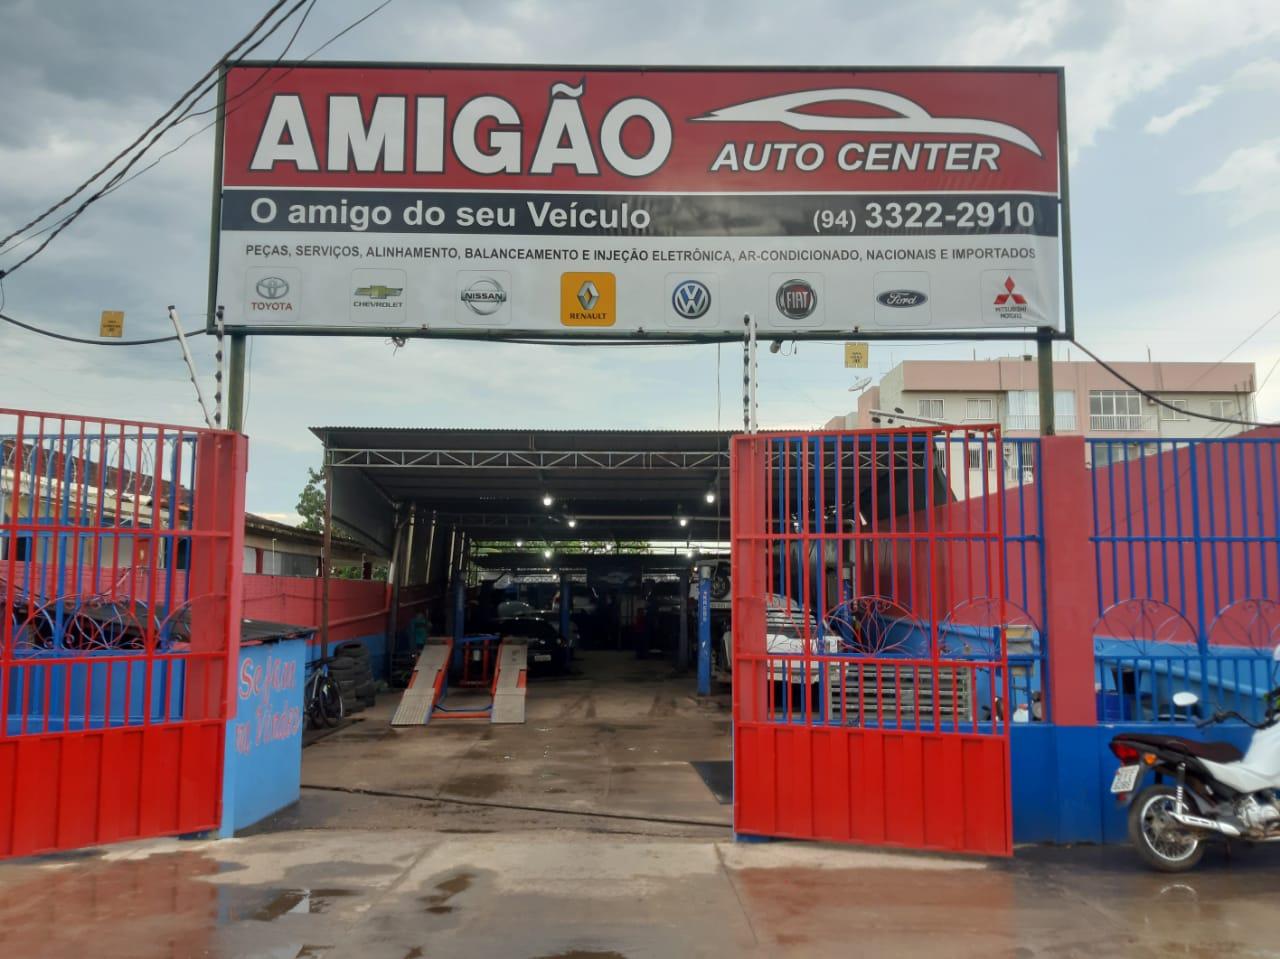 Amigao Auto Center